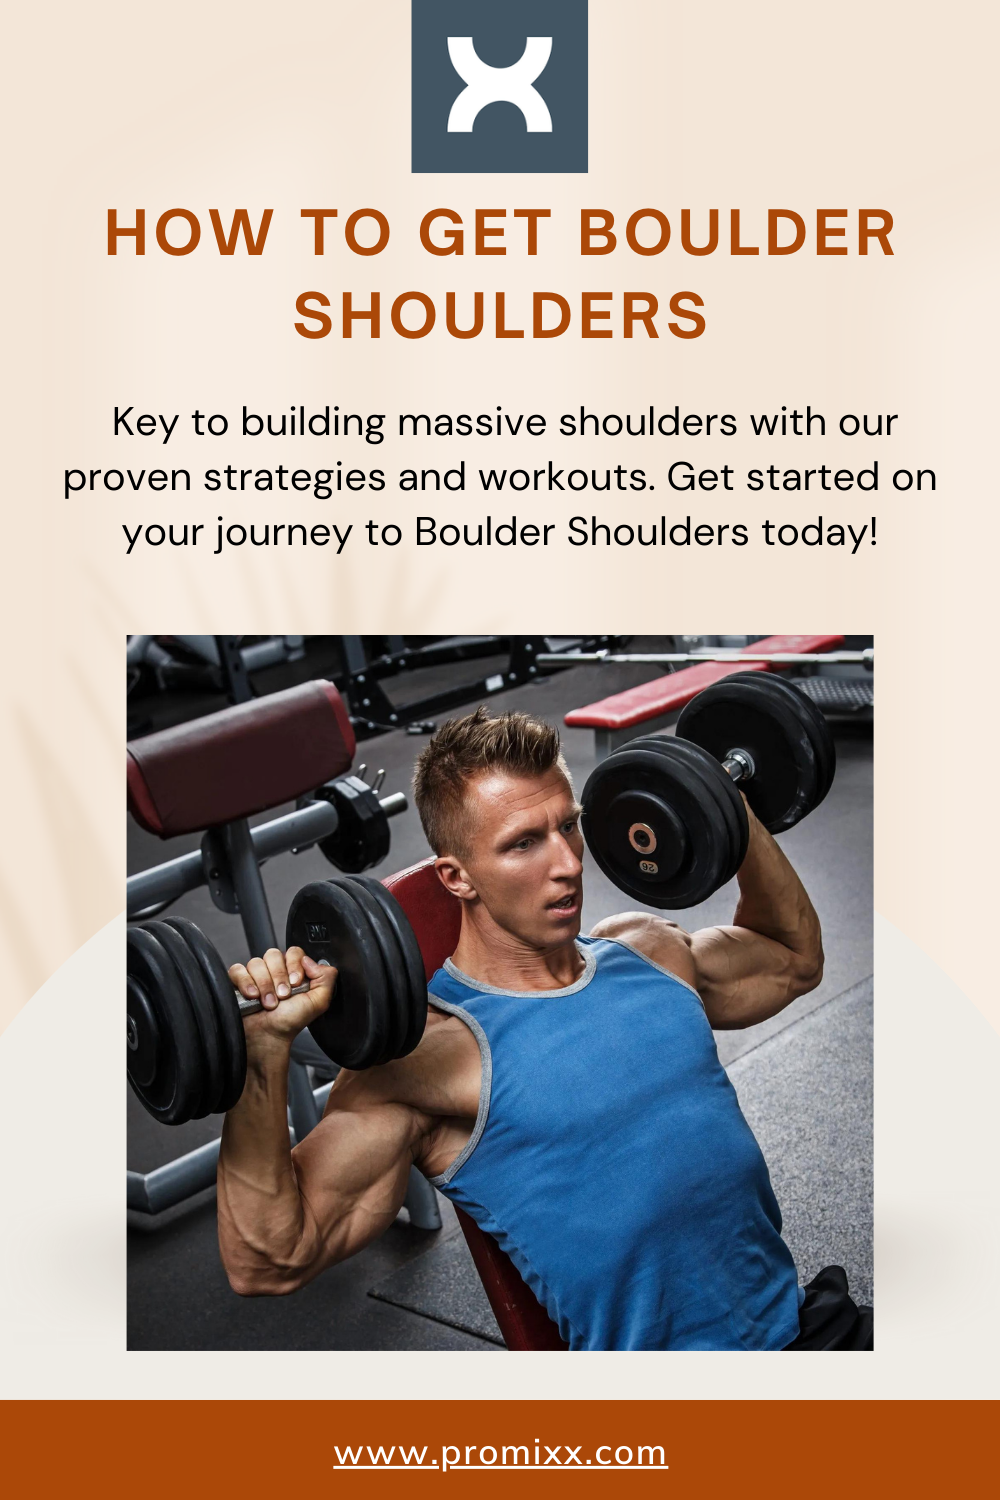 workout exercise gym fitness Health promixx bouldershoulders getbouldershoulders